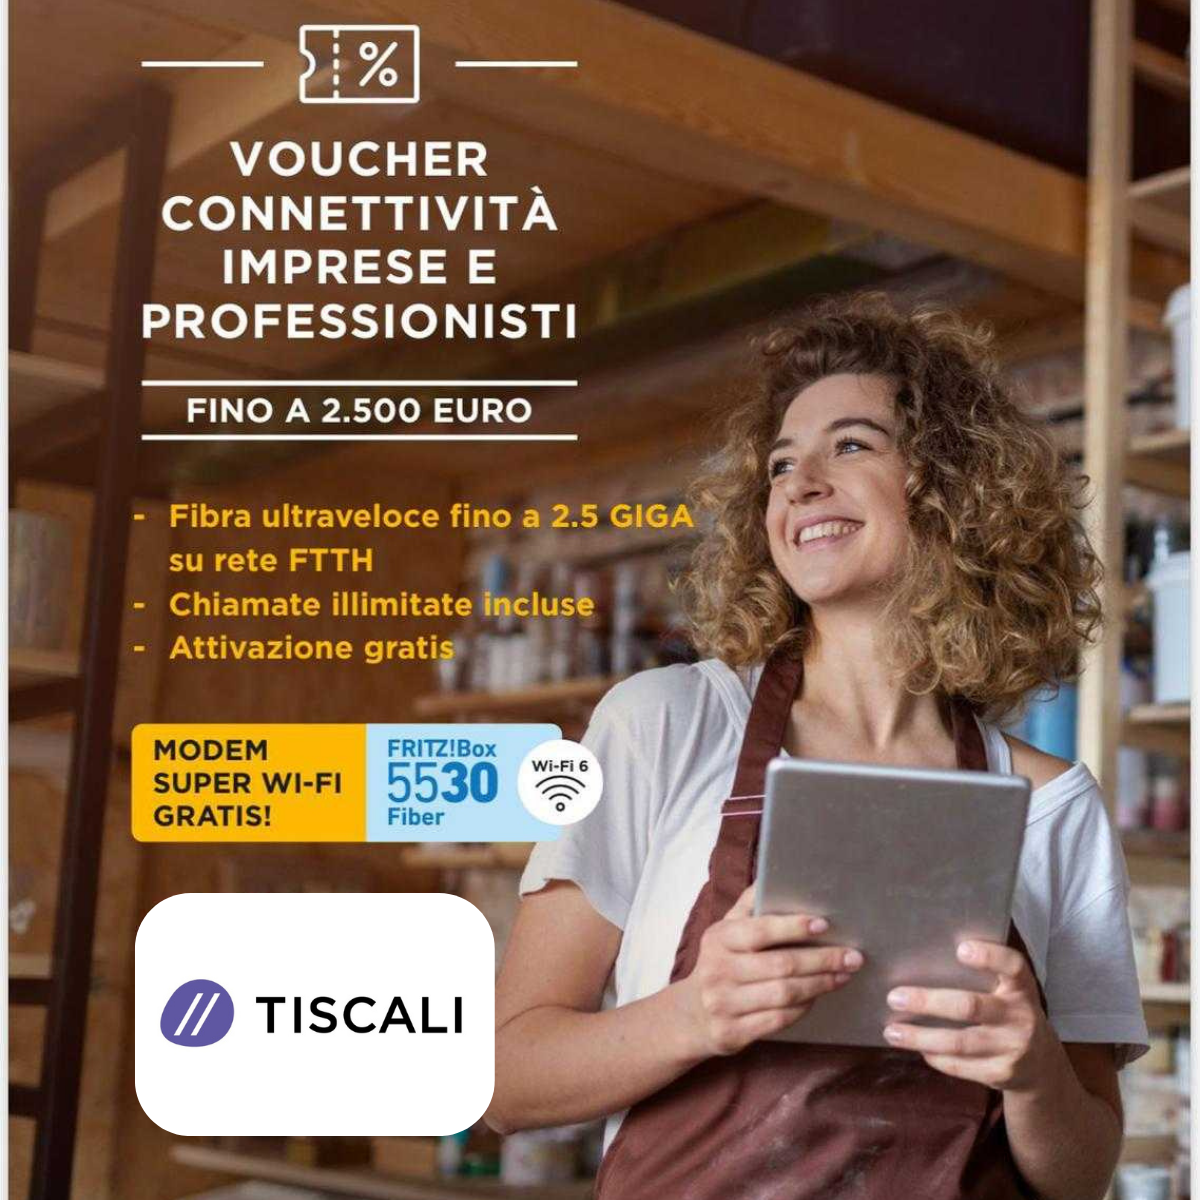 VOUCHER INTERNET IMPRESE TISCALI 0€